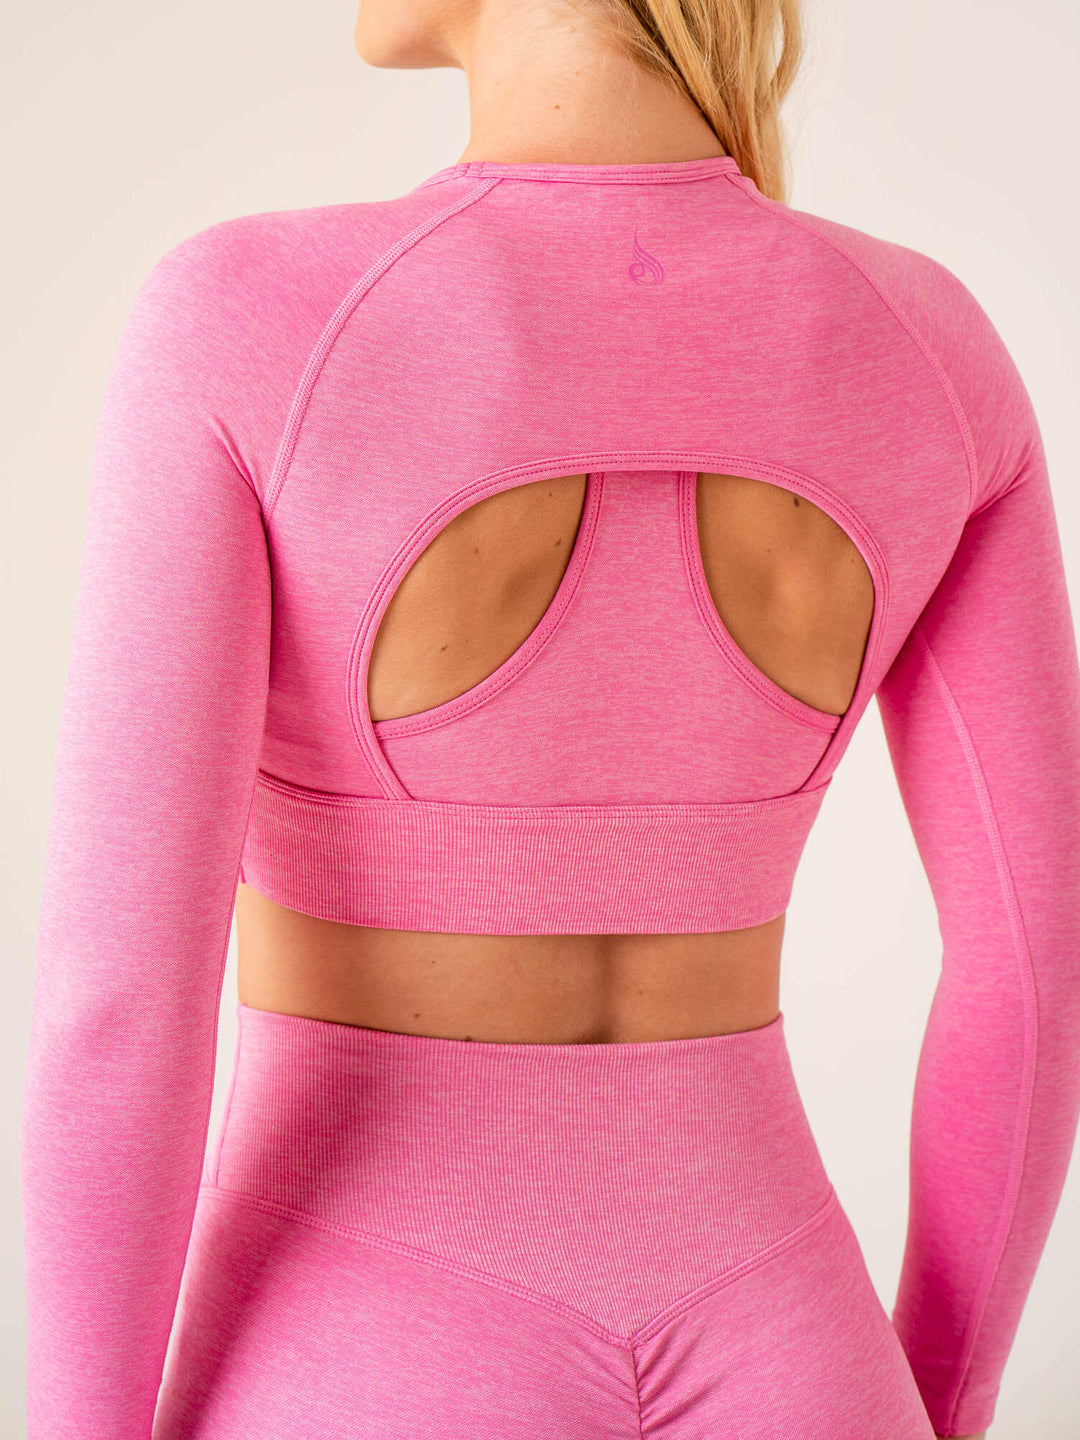 Focus Seamless Long Sleeve Top - Hot Pink Marl Clothing Ryderwear 